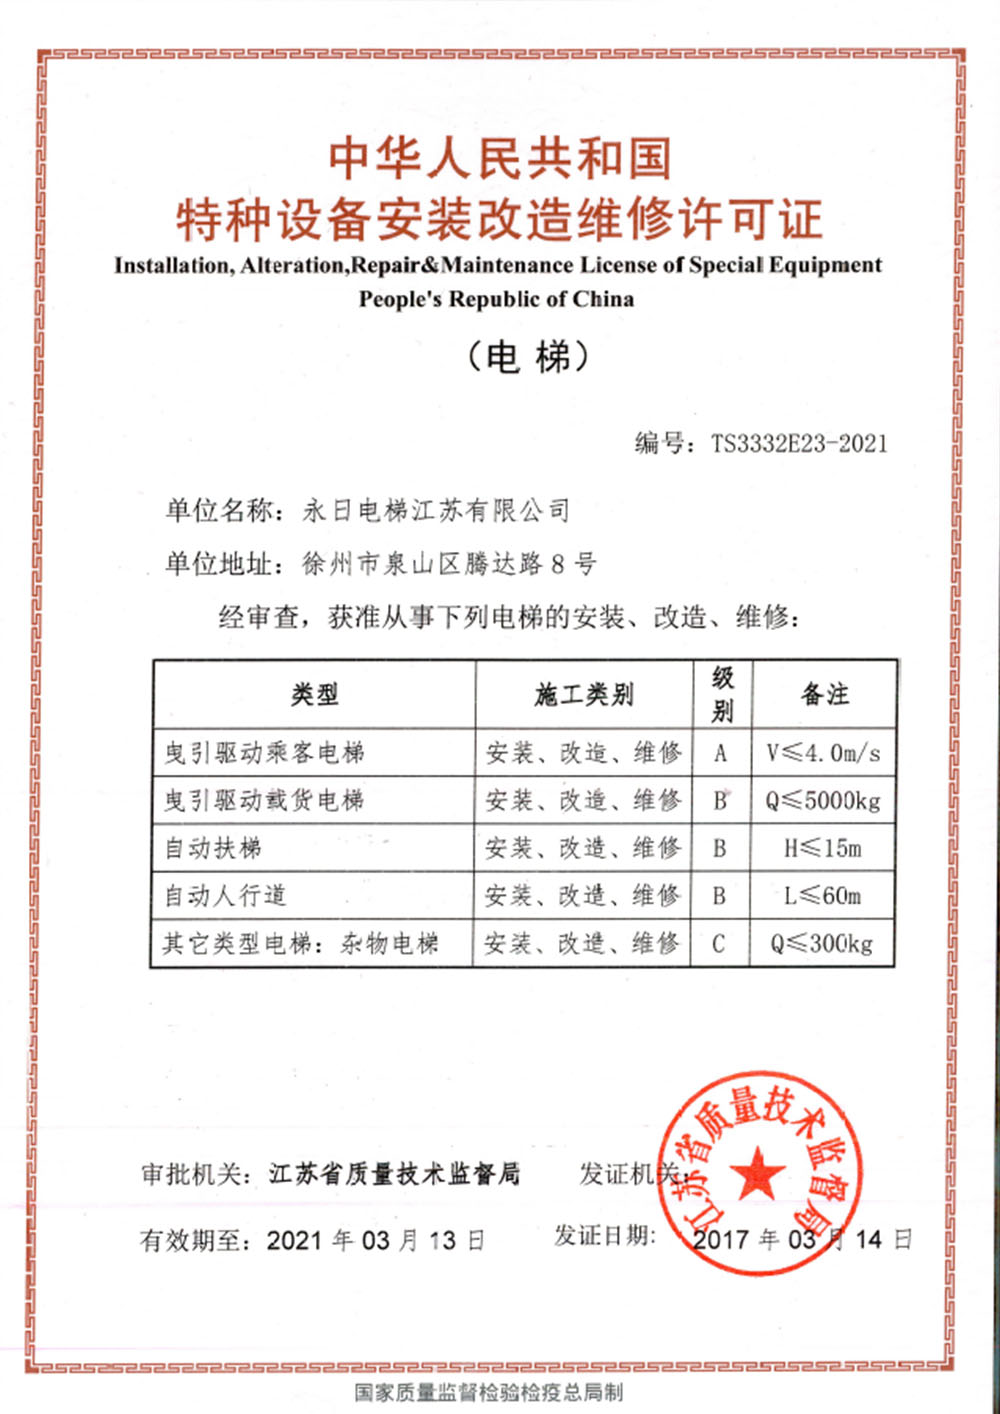 Installation, Maintenance and Transformation License (Jiangsu)